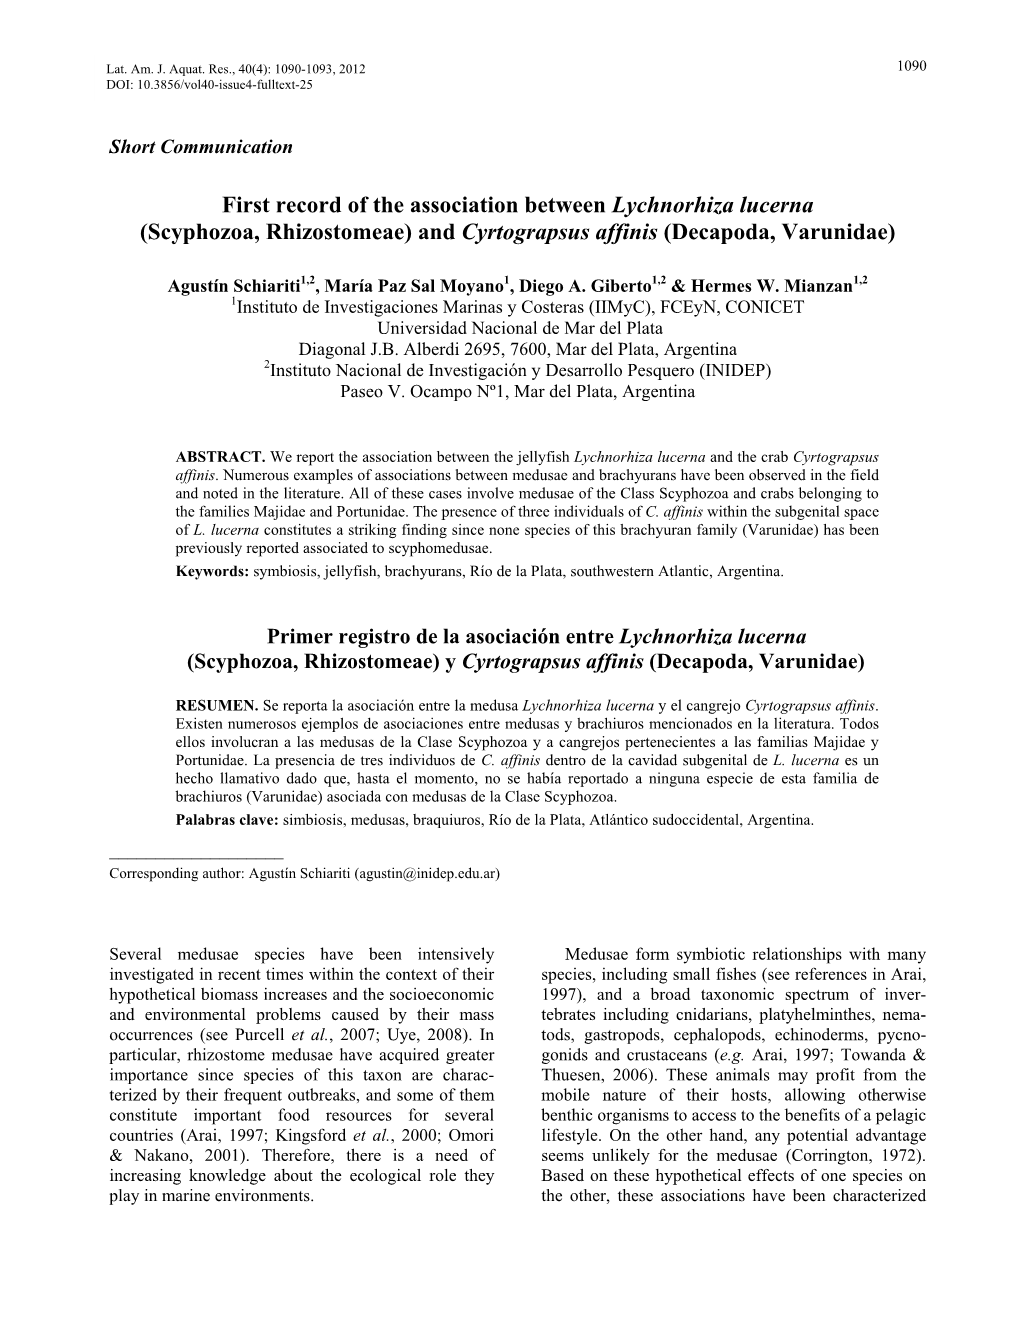 First Record of the Association Between Lychnorhiza Lucerna (Scyphozoa, Rhizostomeae) and Cyrtograpsus Affinis (Decapoda, Varunidae)